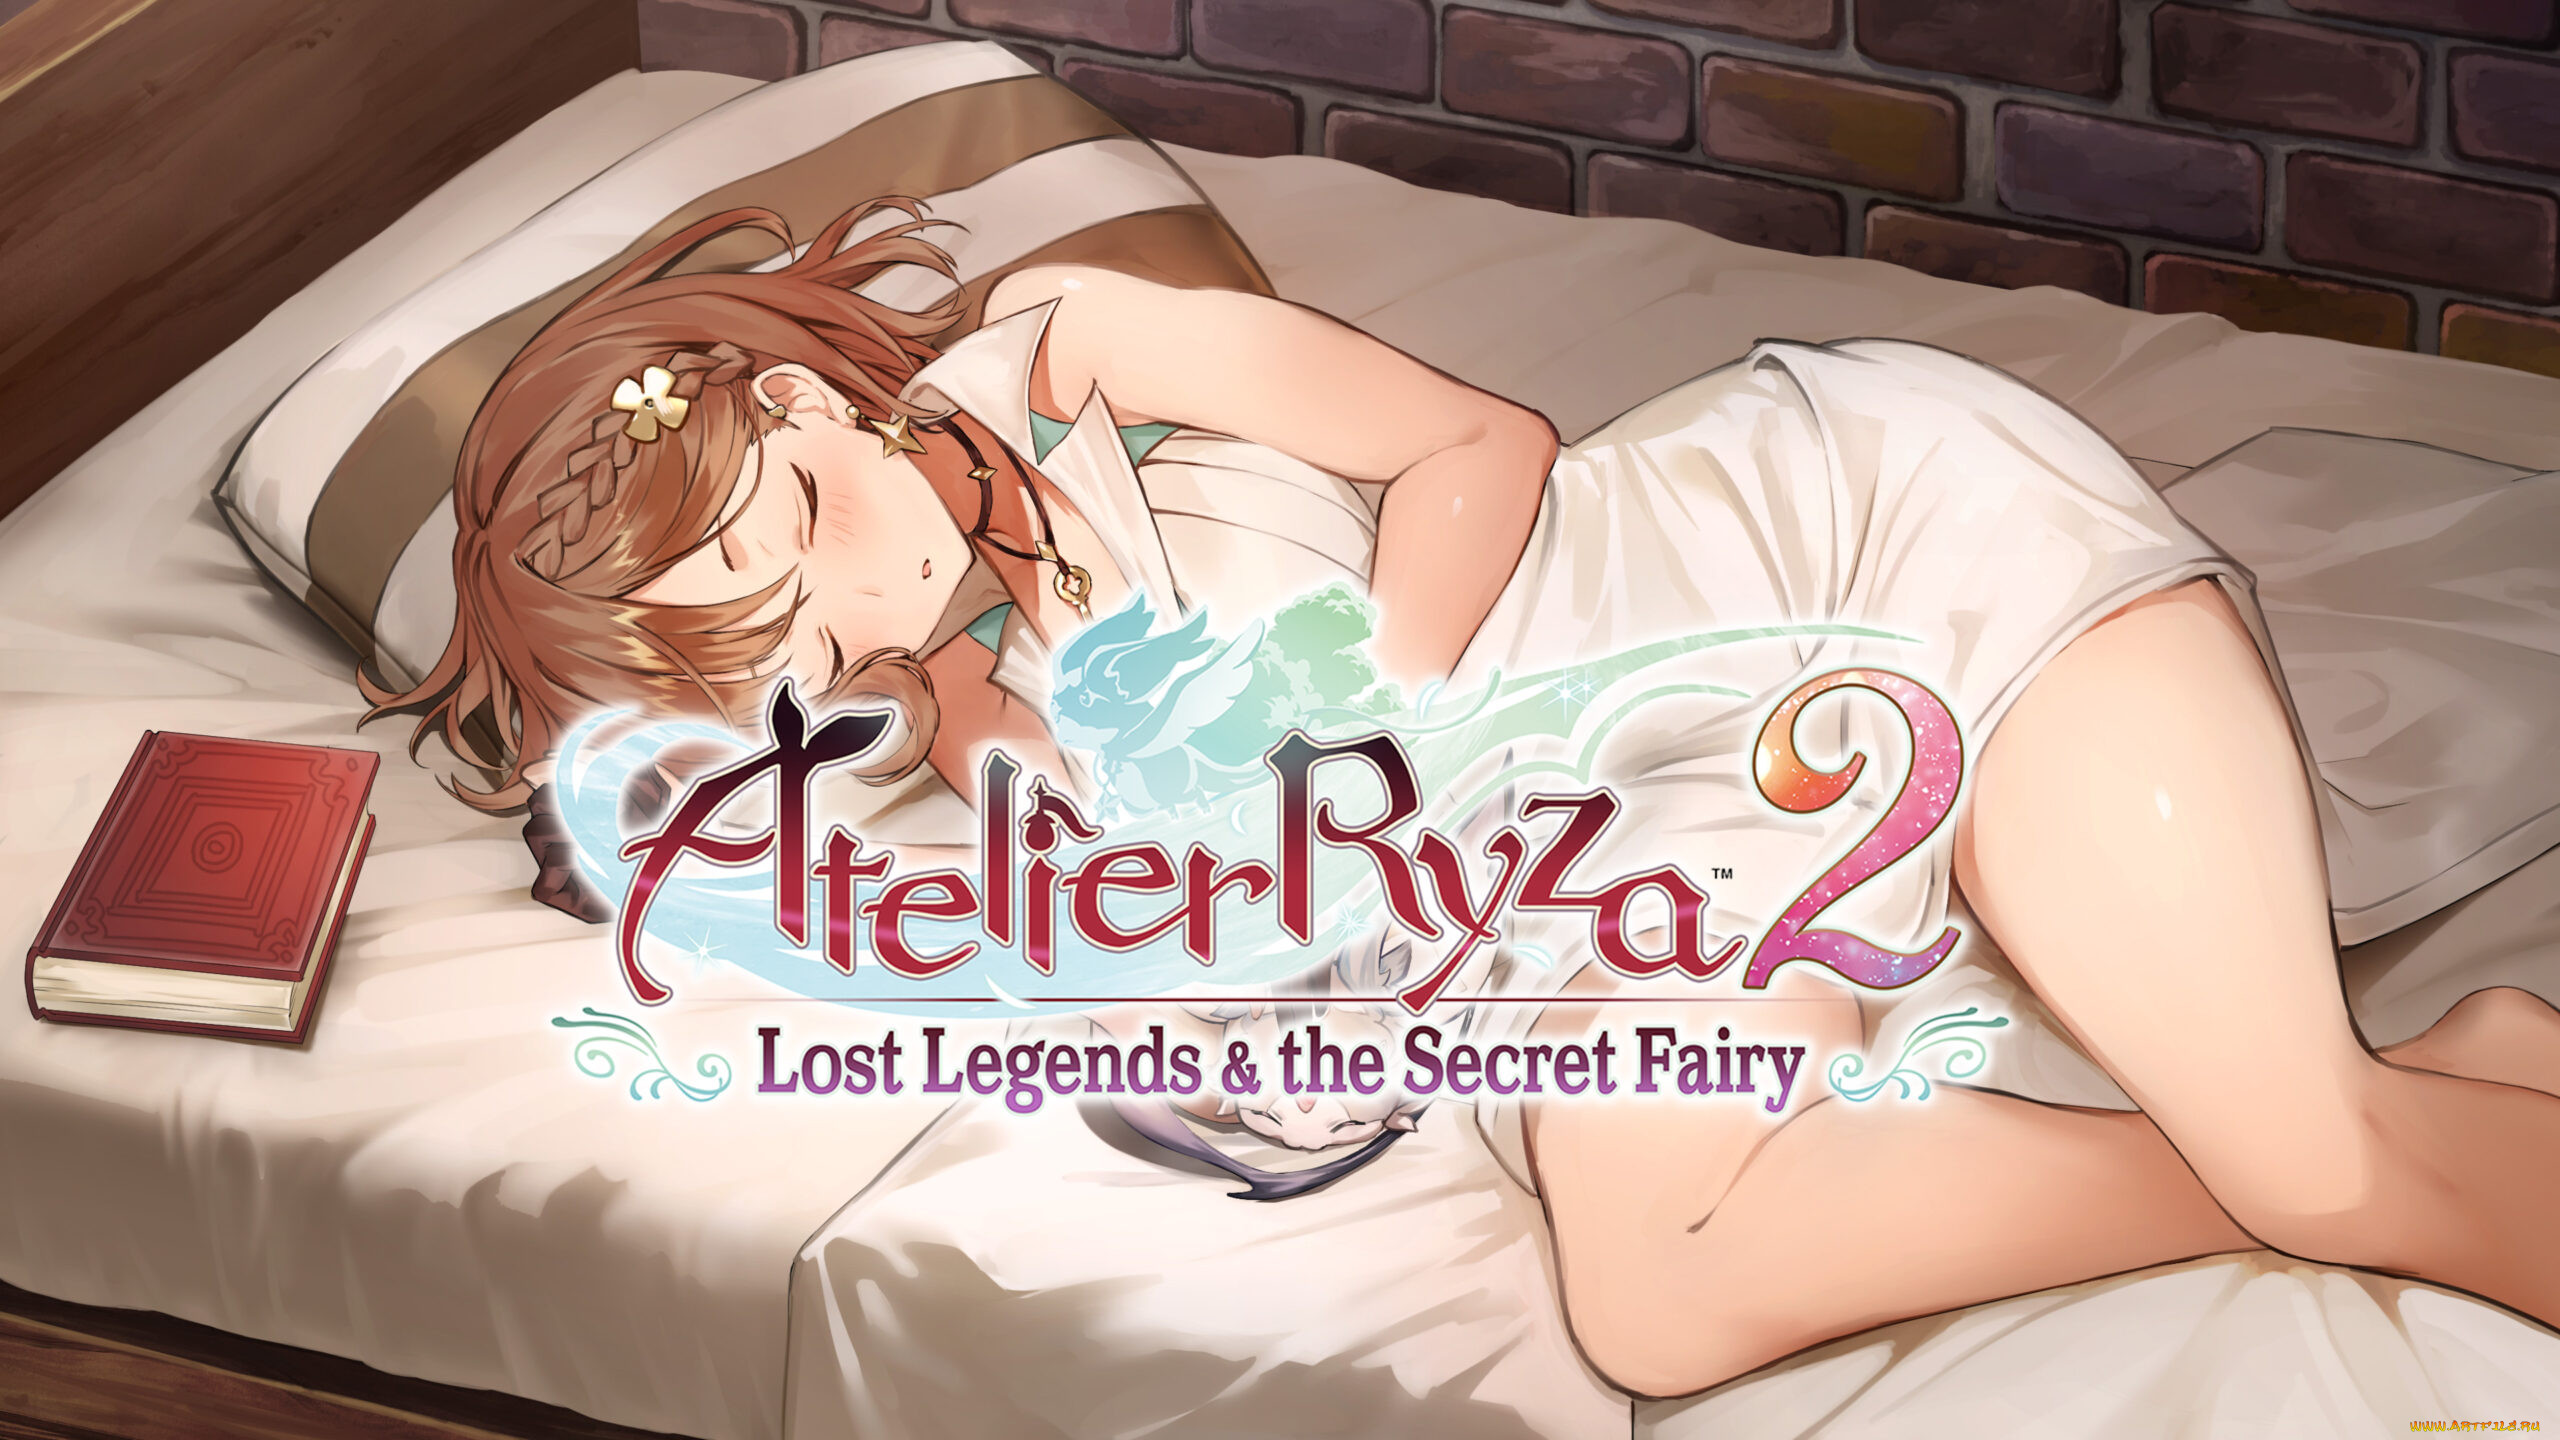 atelier ryza 2 lost legends & the secret fairy,  , atelier ryza 2,  lost legends & the secret fairy, atelier, ryza, 2, lost, legends, the, secret, fairy